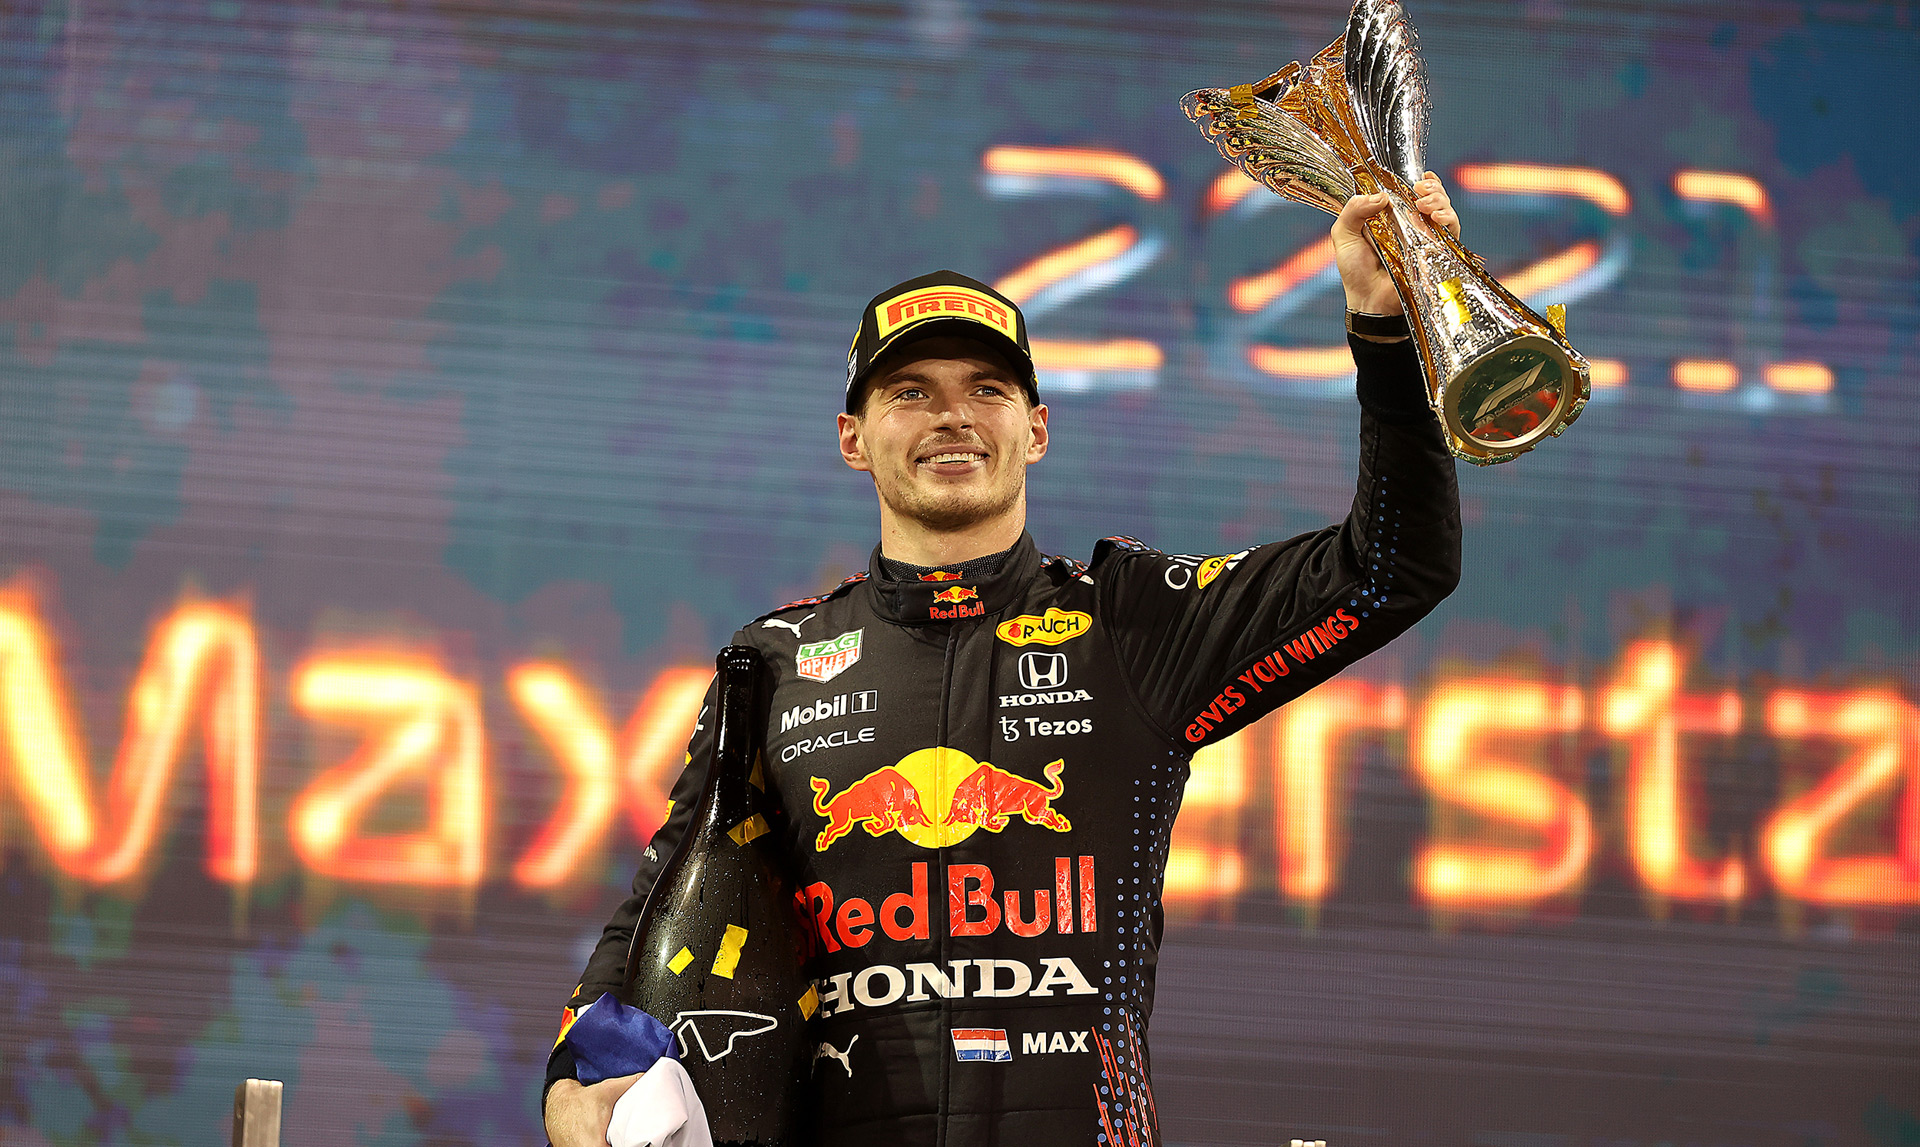 Red Bull Racings Max Verstappen At The 2021 Formula One Abu Dhabi Grand Prix 100819201 H 